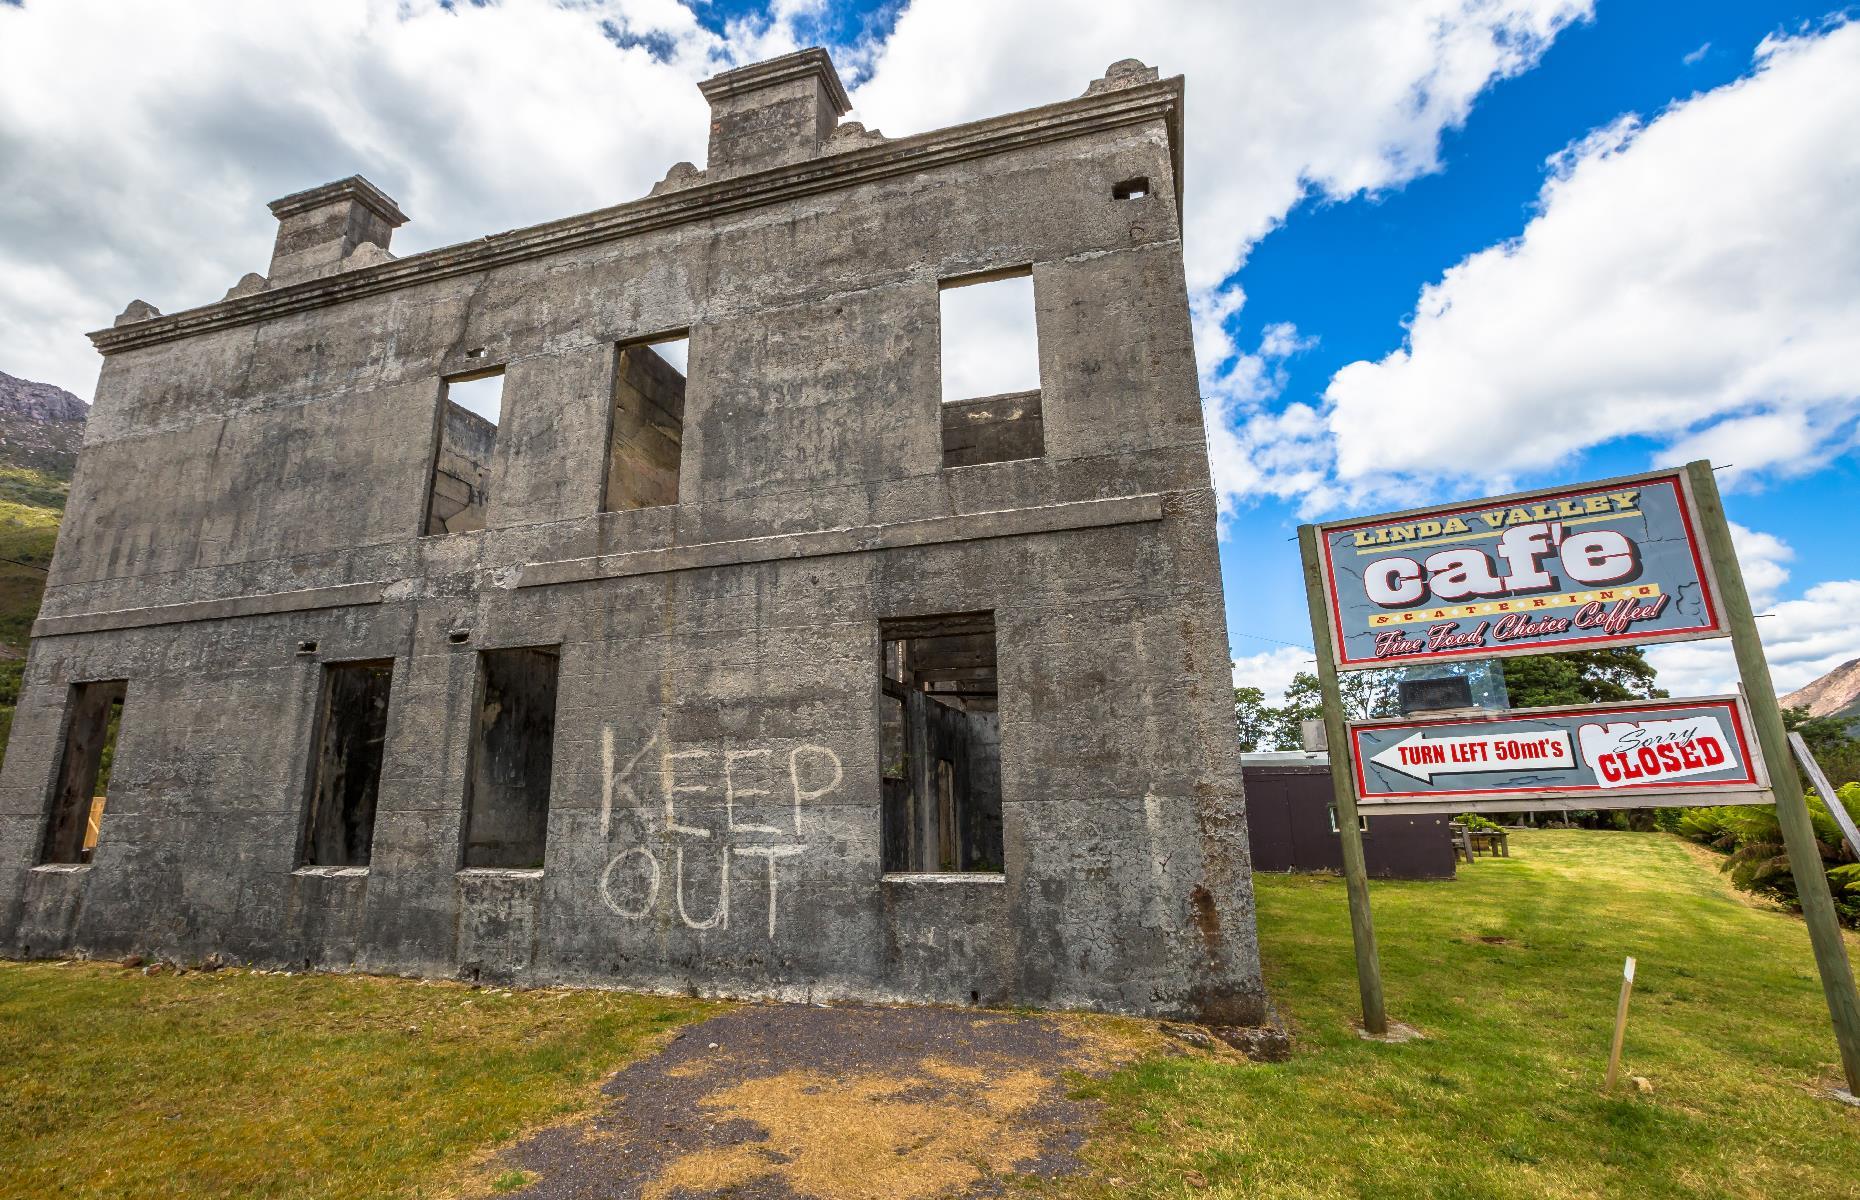 A Tasmanian mining ghost town that fell into decline, Australia